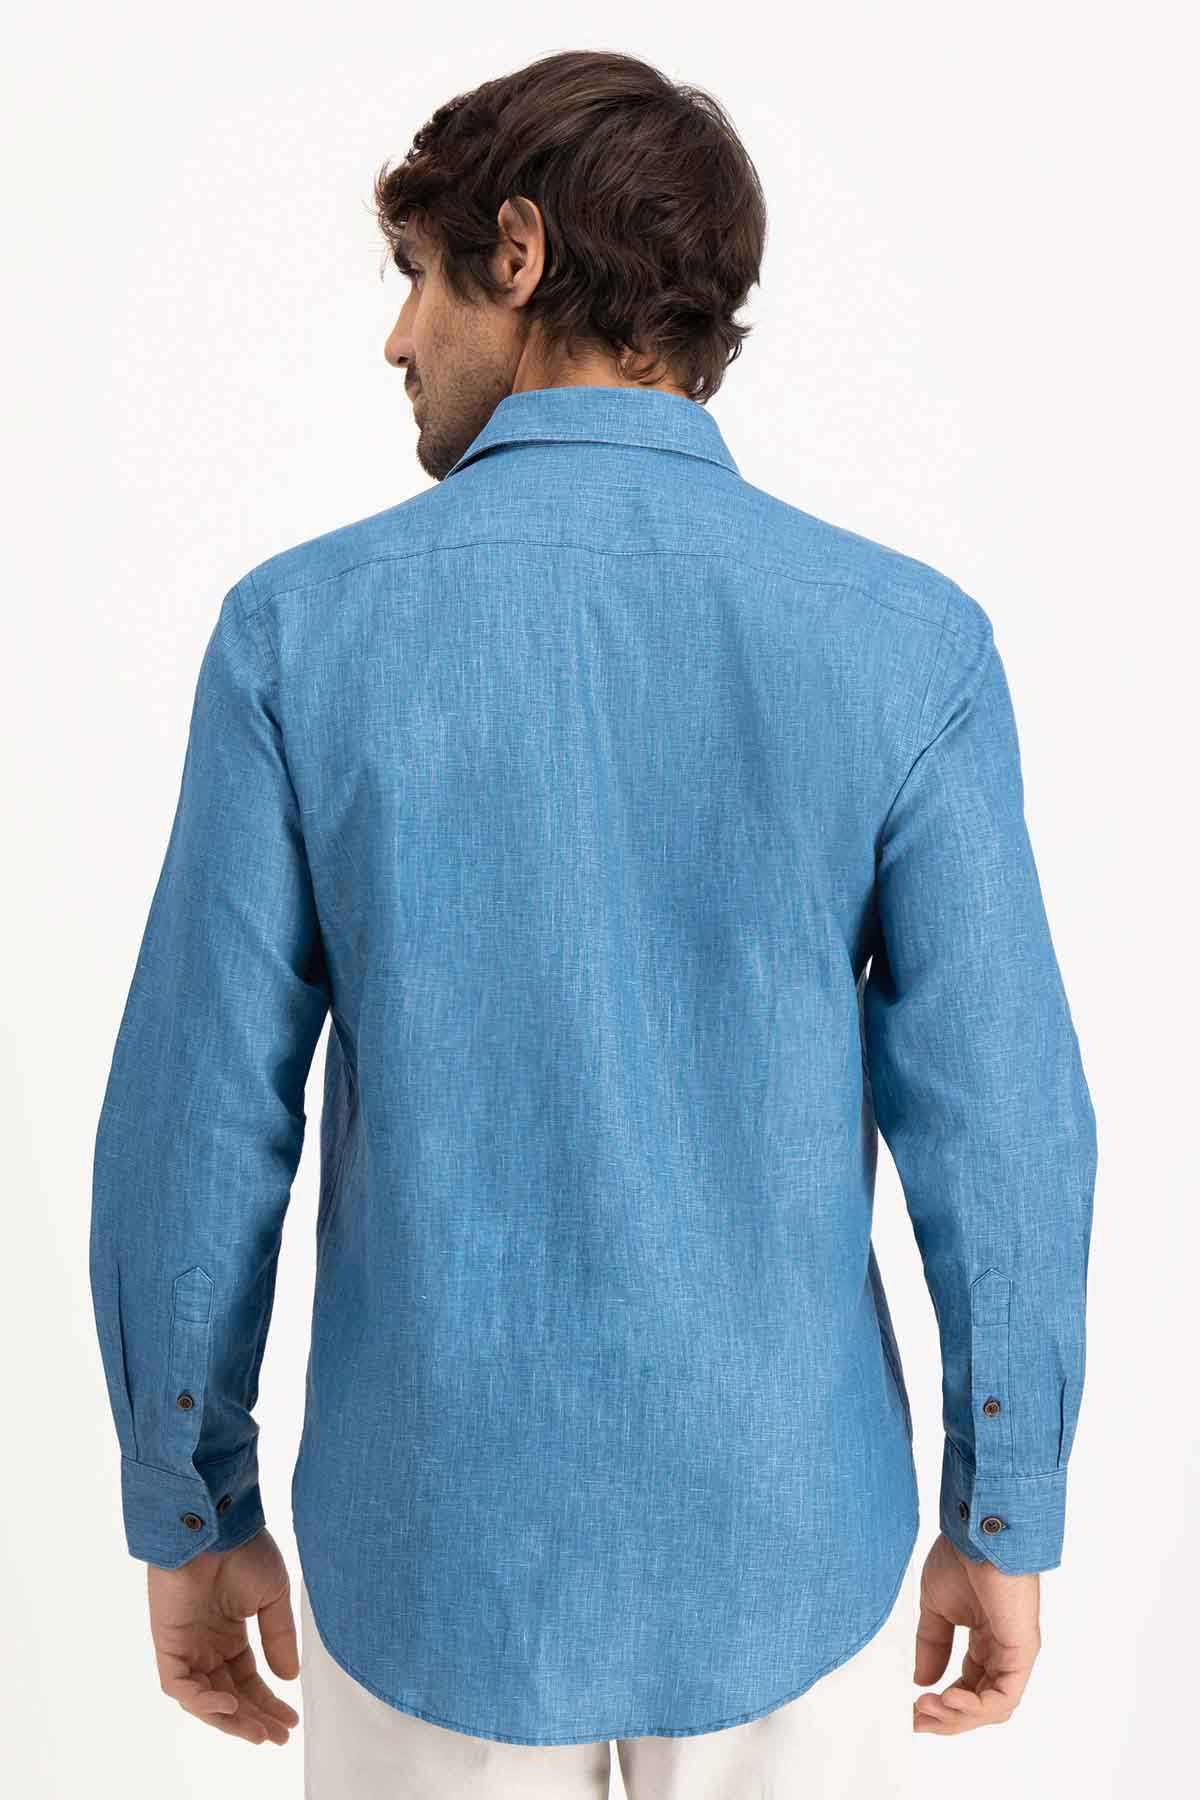 Camisa Paper Touch Calderoni Color Turquesa Slim Fit